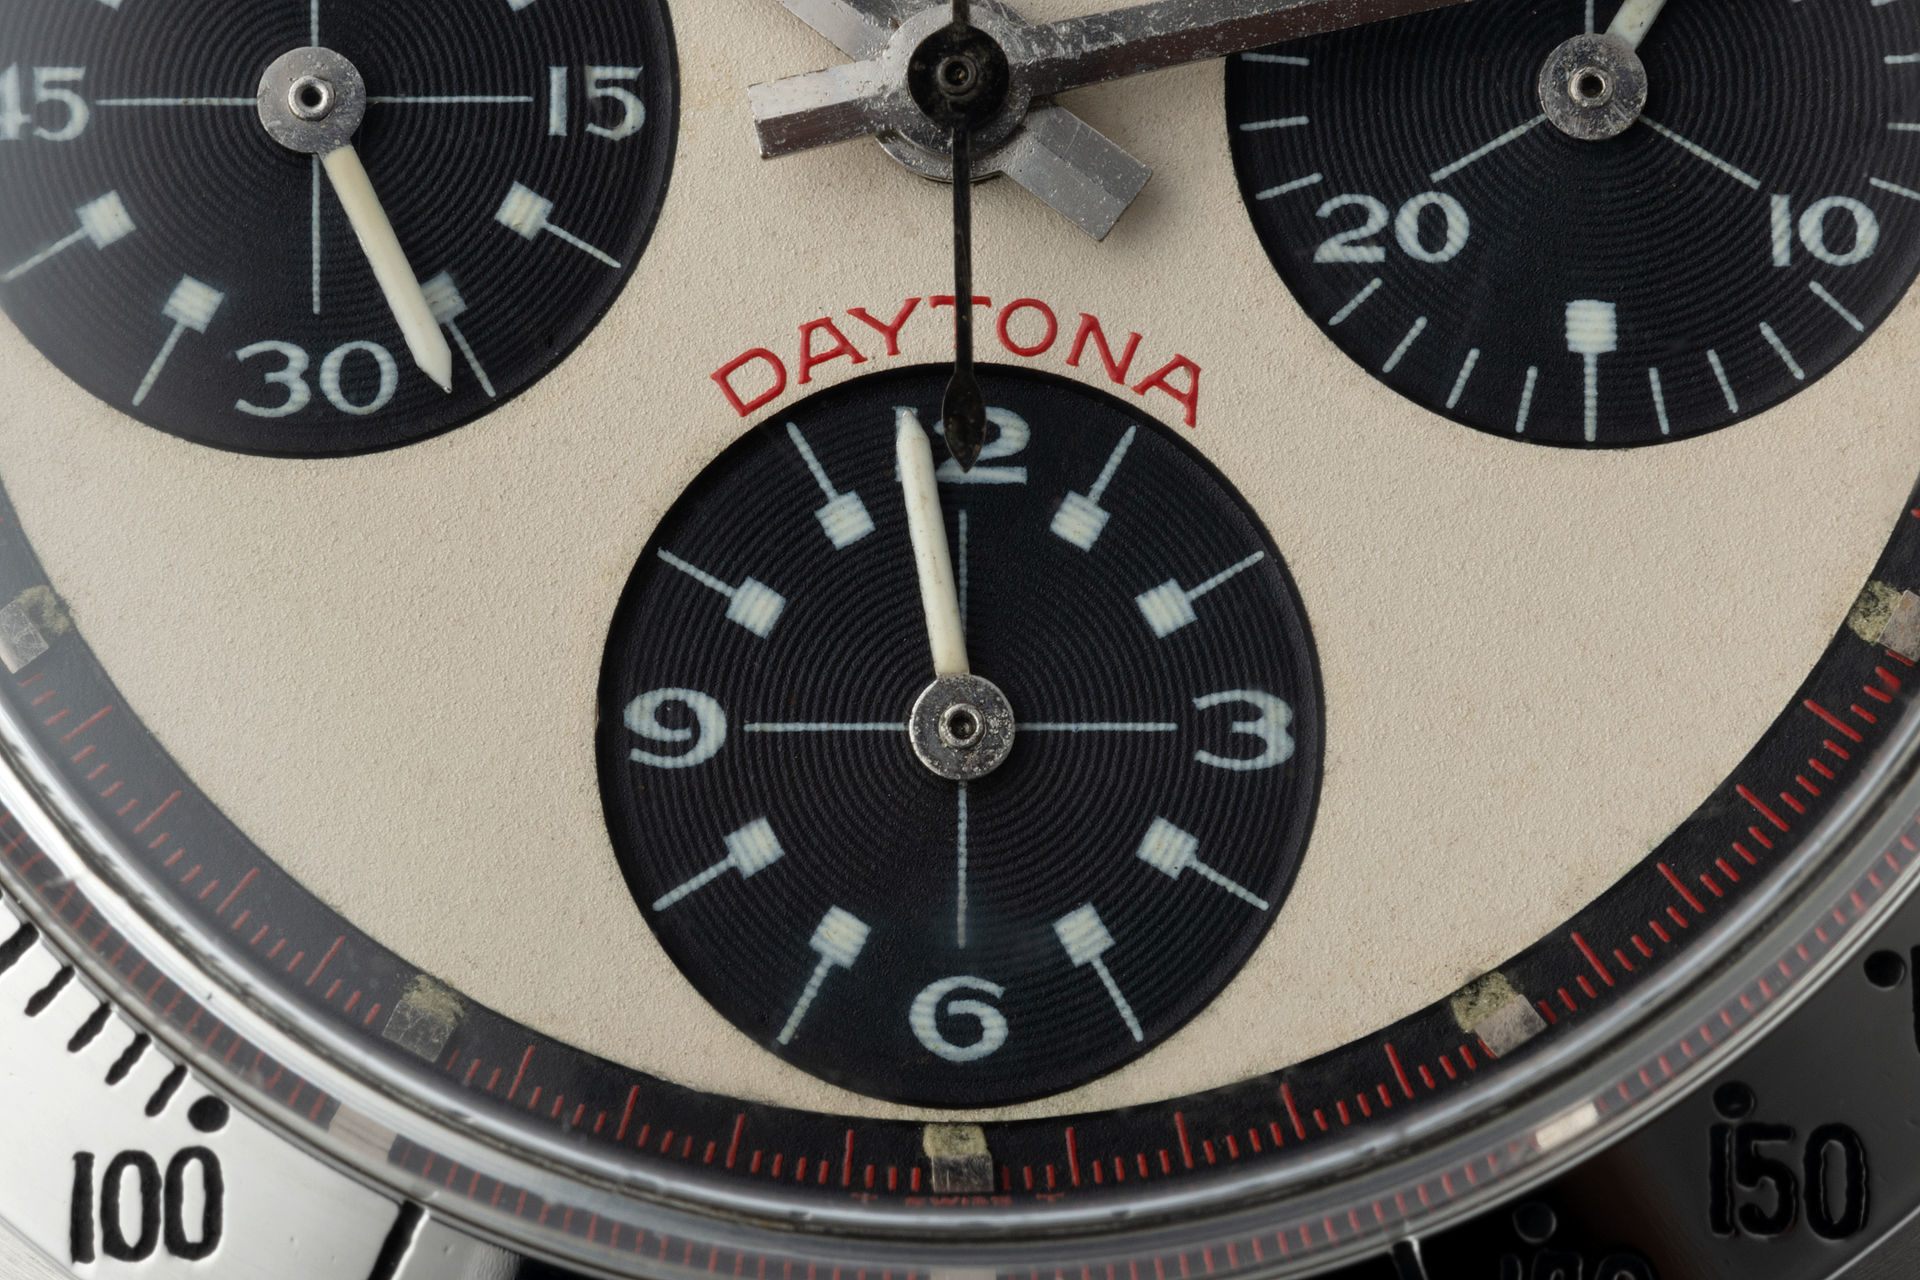 Rare "Three Colour" Investment Piece | ref 6239 | Rolex Cosmograph Daytona